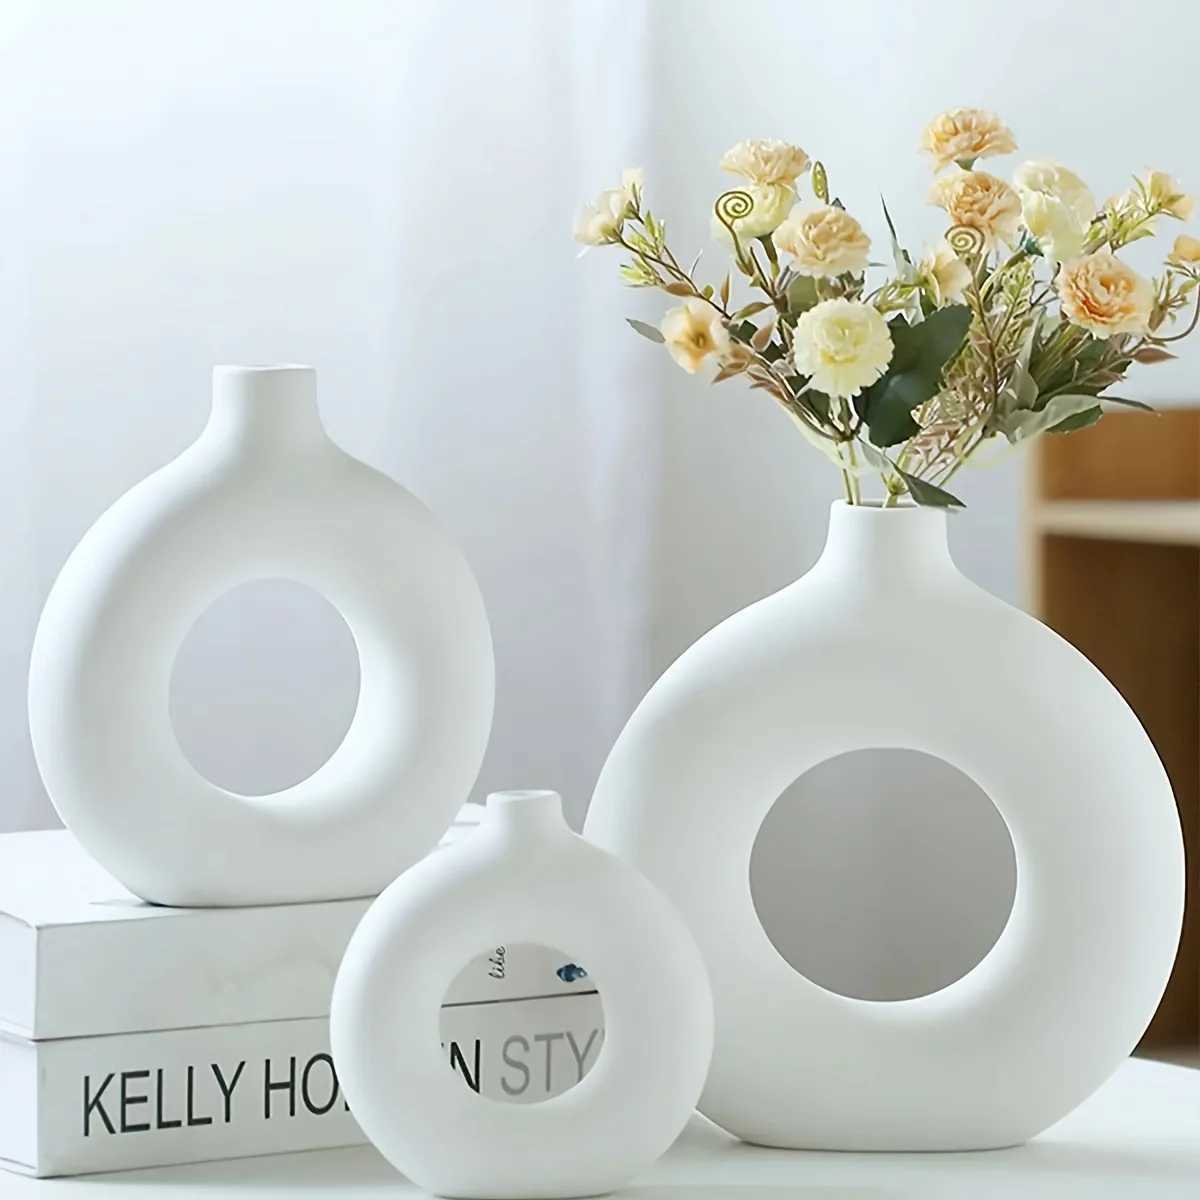 Vasos vasos de vasos de cerâmica branca/bege para decoração vasos de decoração de casa moderna vasos boho para decoração vaso círculo de vaso redondo donut vas